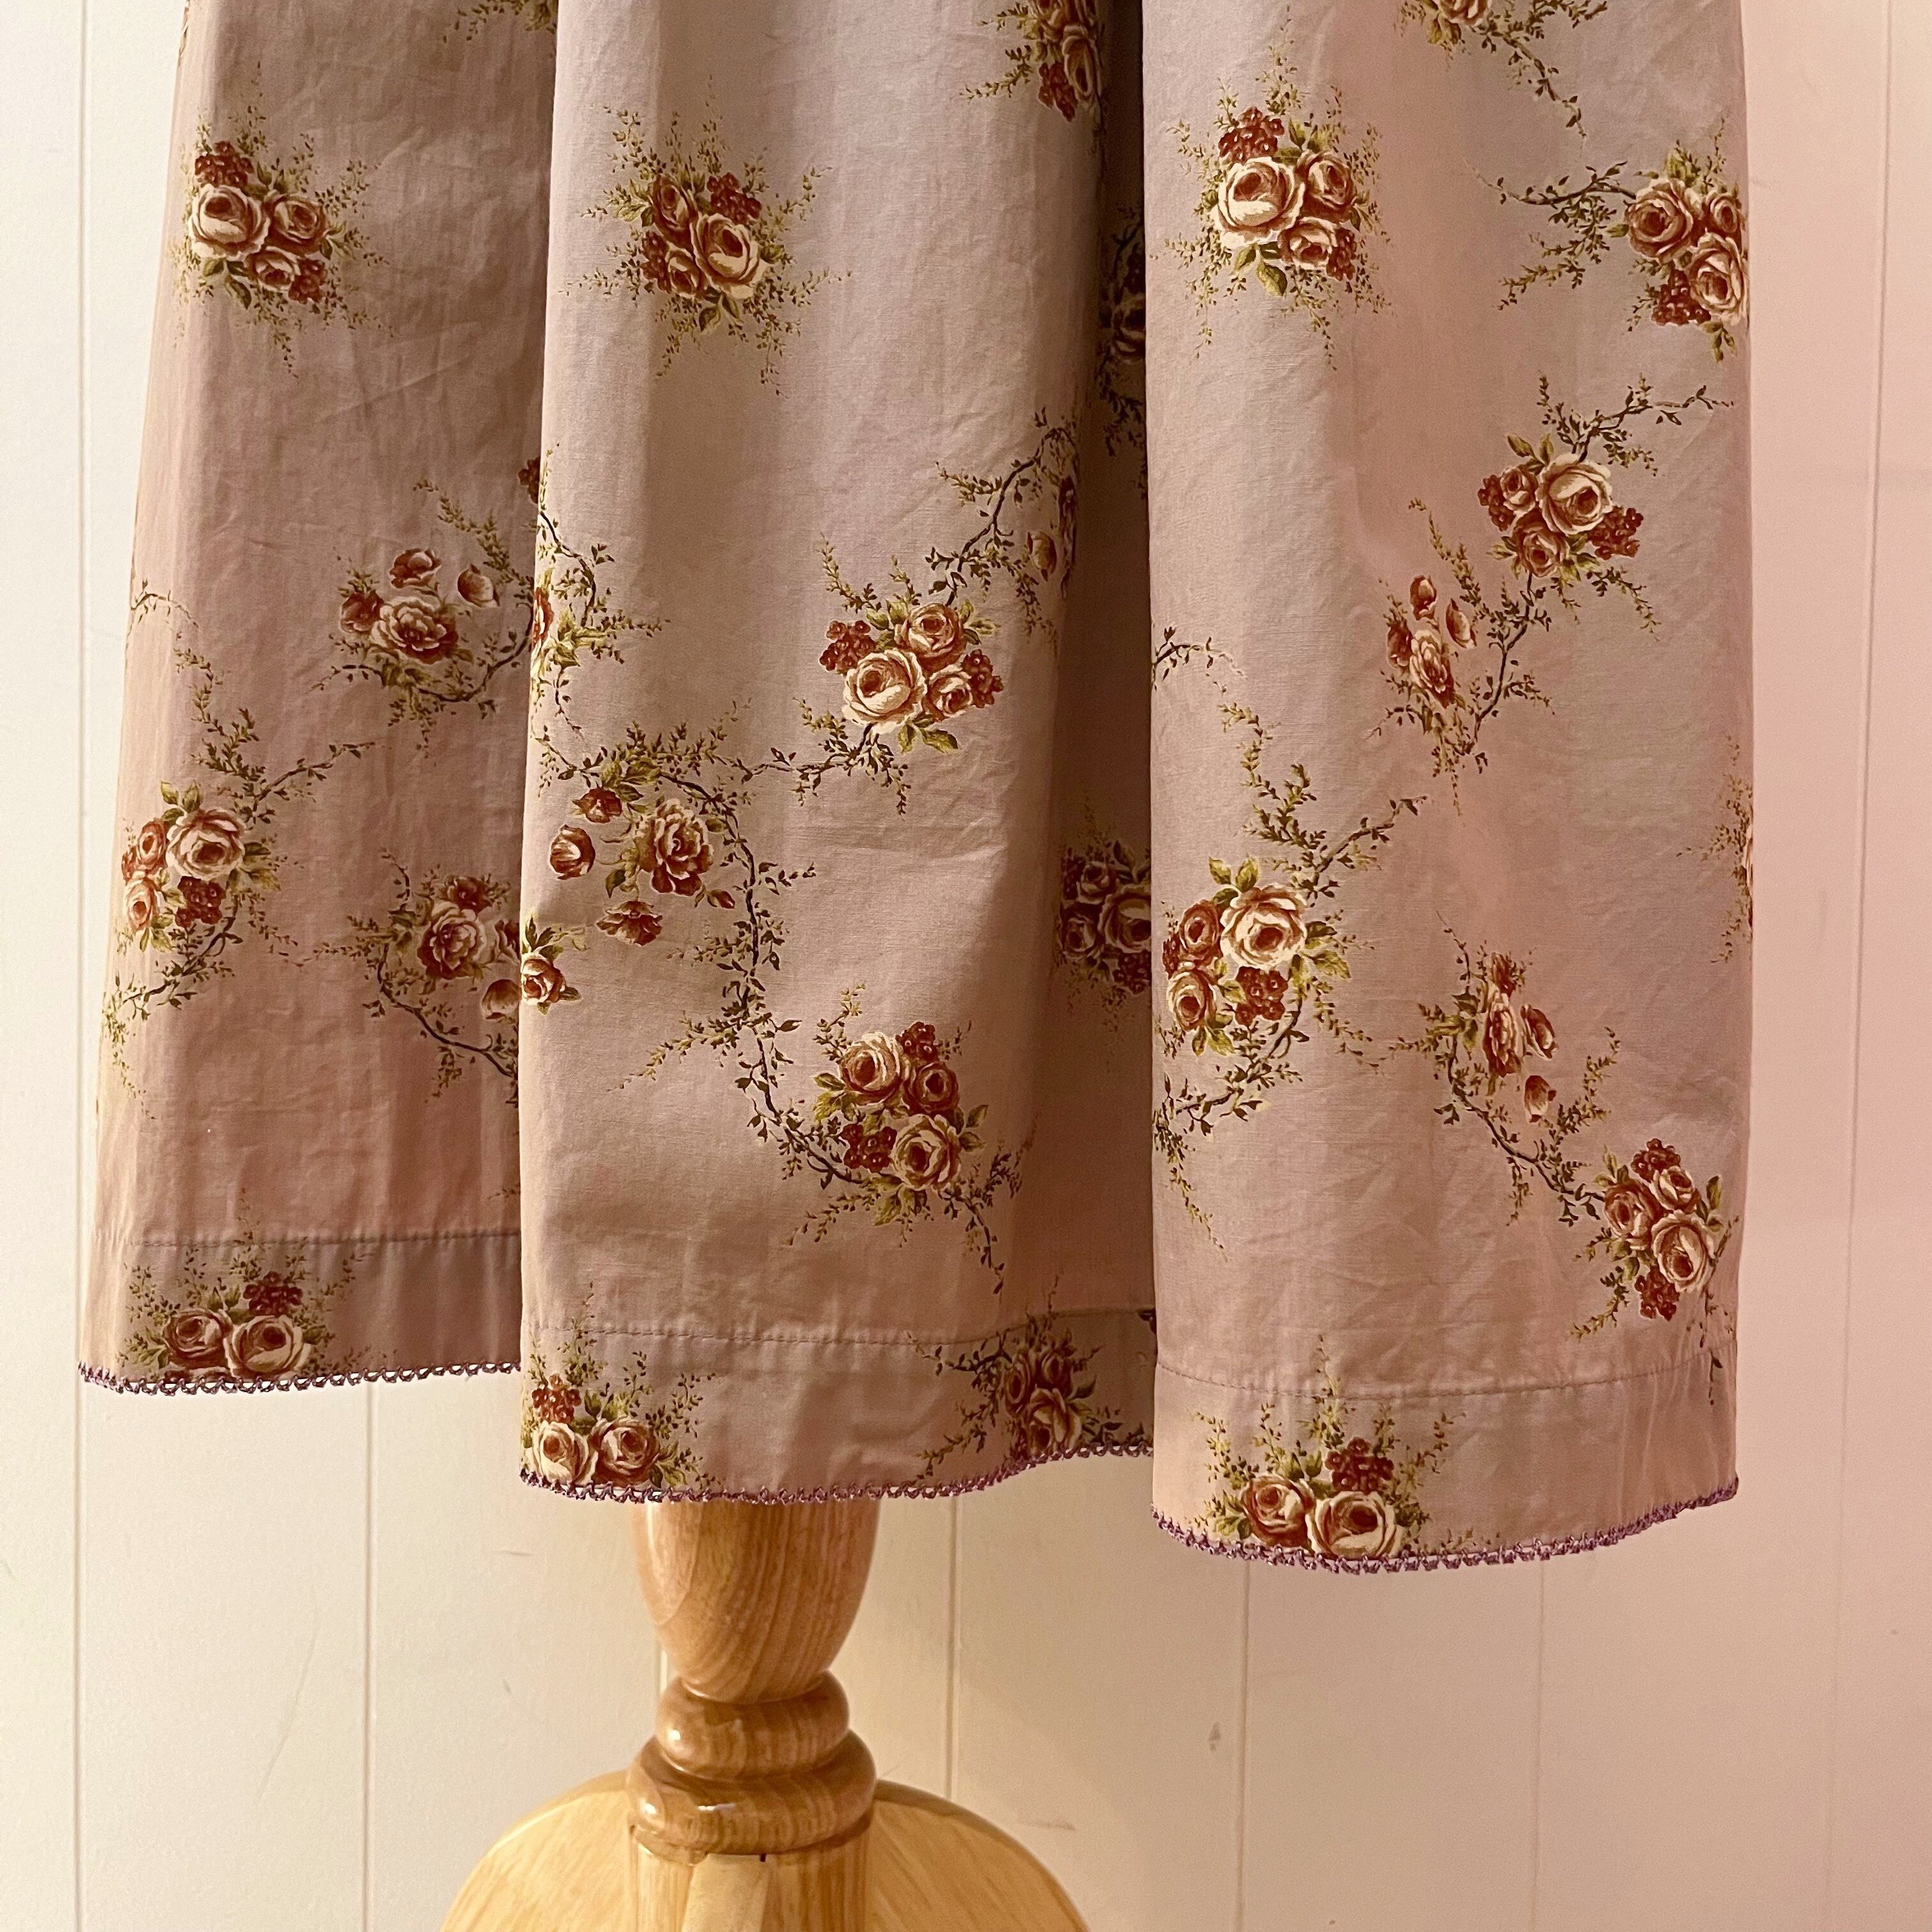 wonderful world / lavender rose tiered skirt